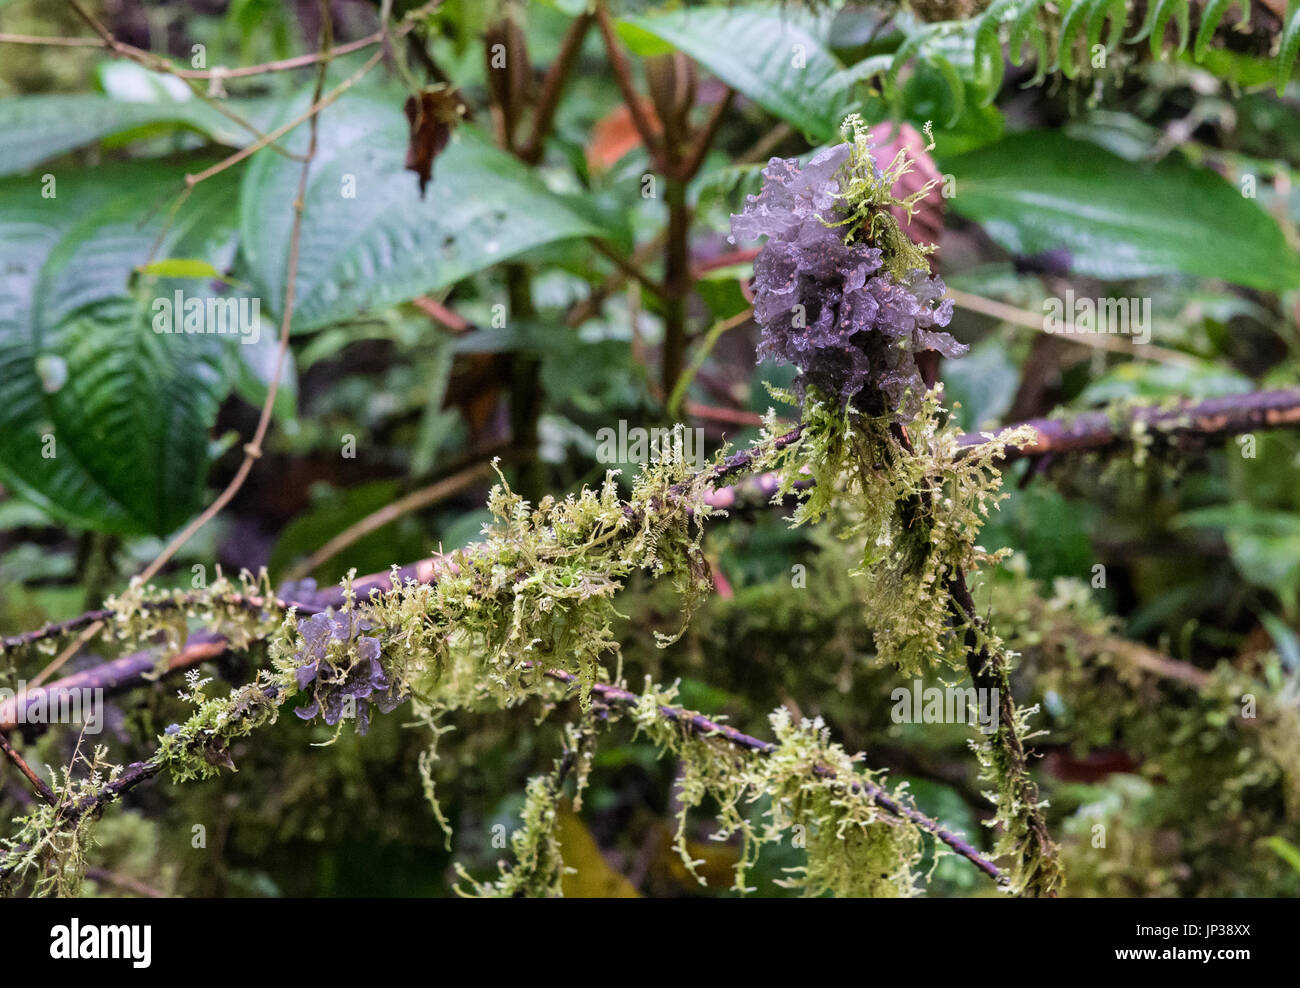 Seltsame transluzente lila Pilze wachsen auf Moos bedeckt Ast in den Wald der Anden. Kolumbien, Südamerika Stockfoto